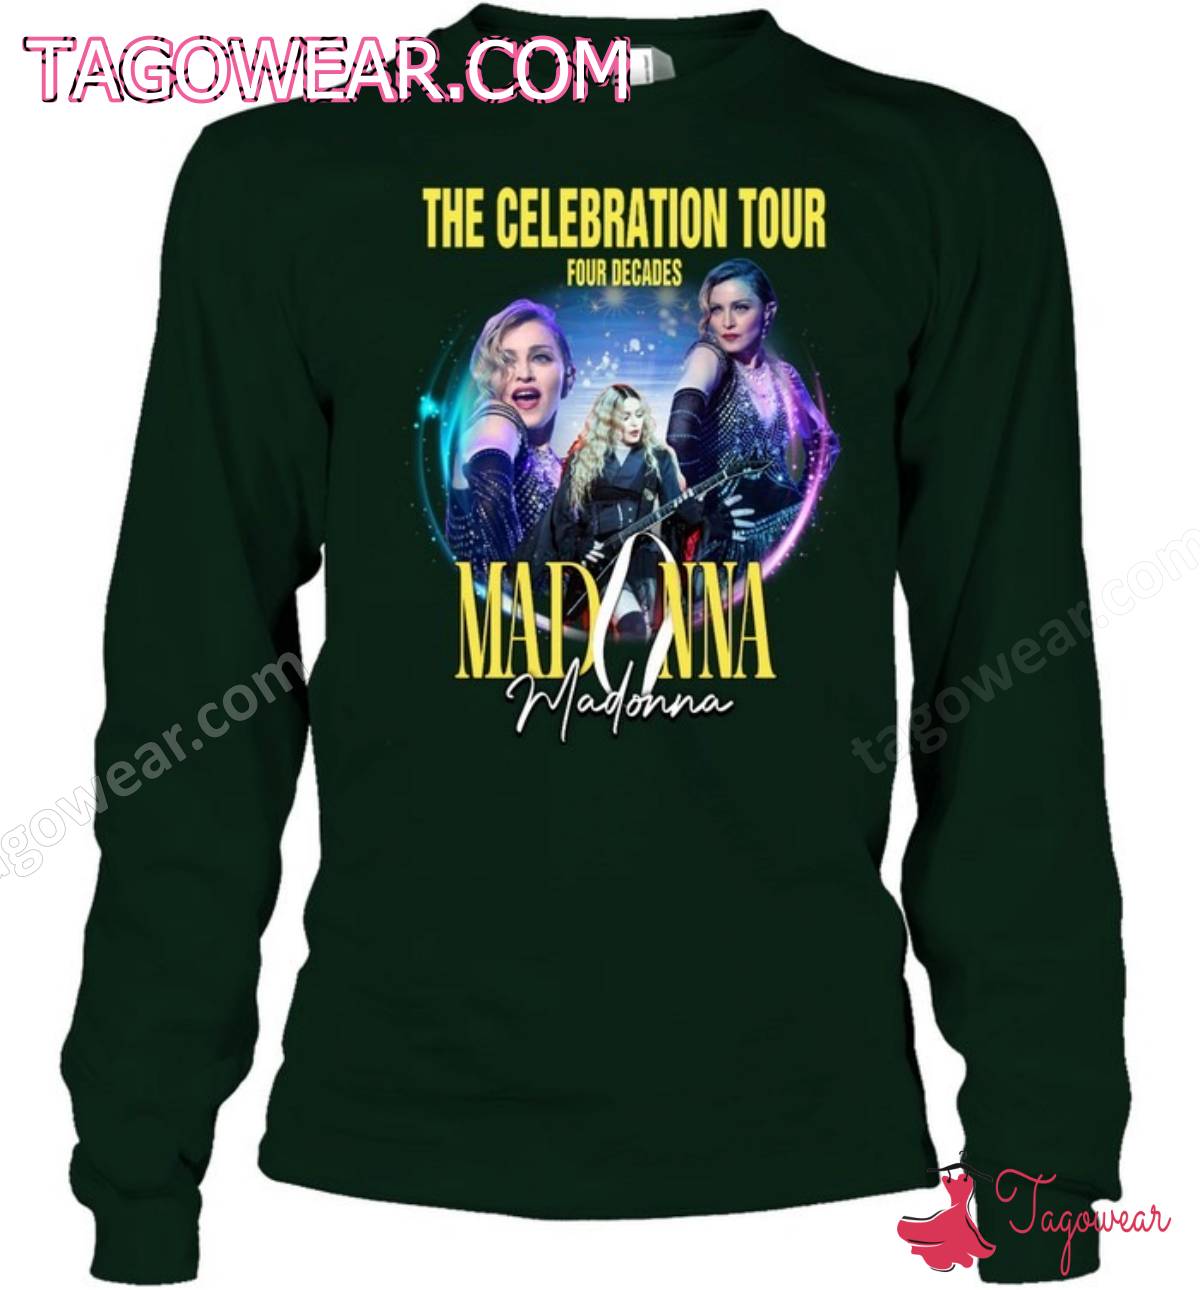 Madonna The Celebration Tour Four Decades Shirt, Tank Top b